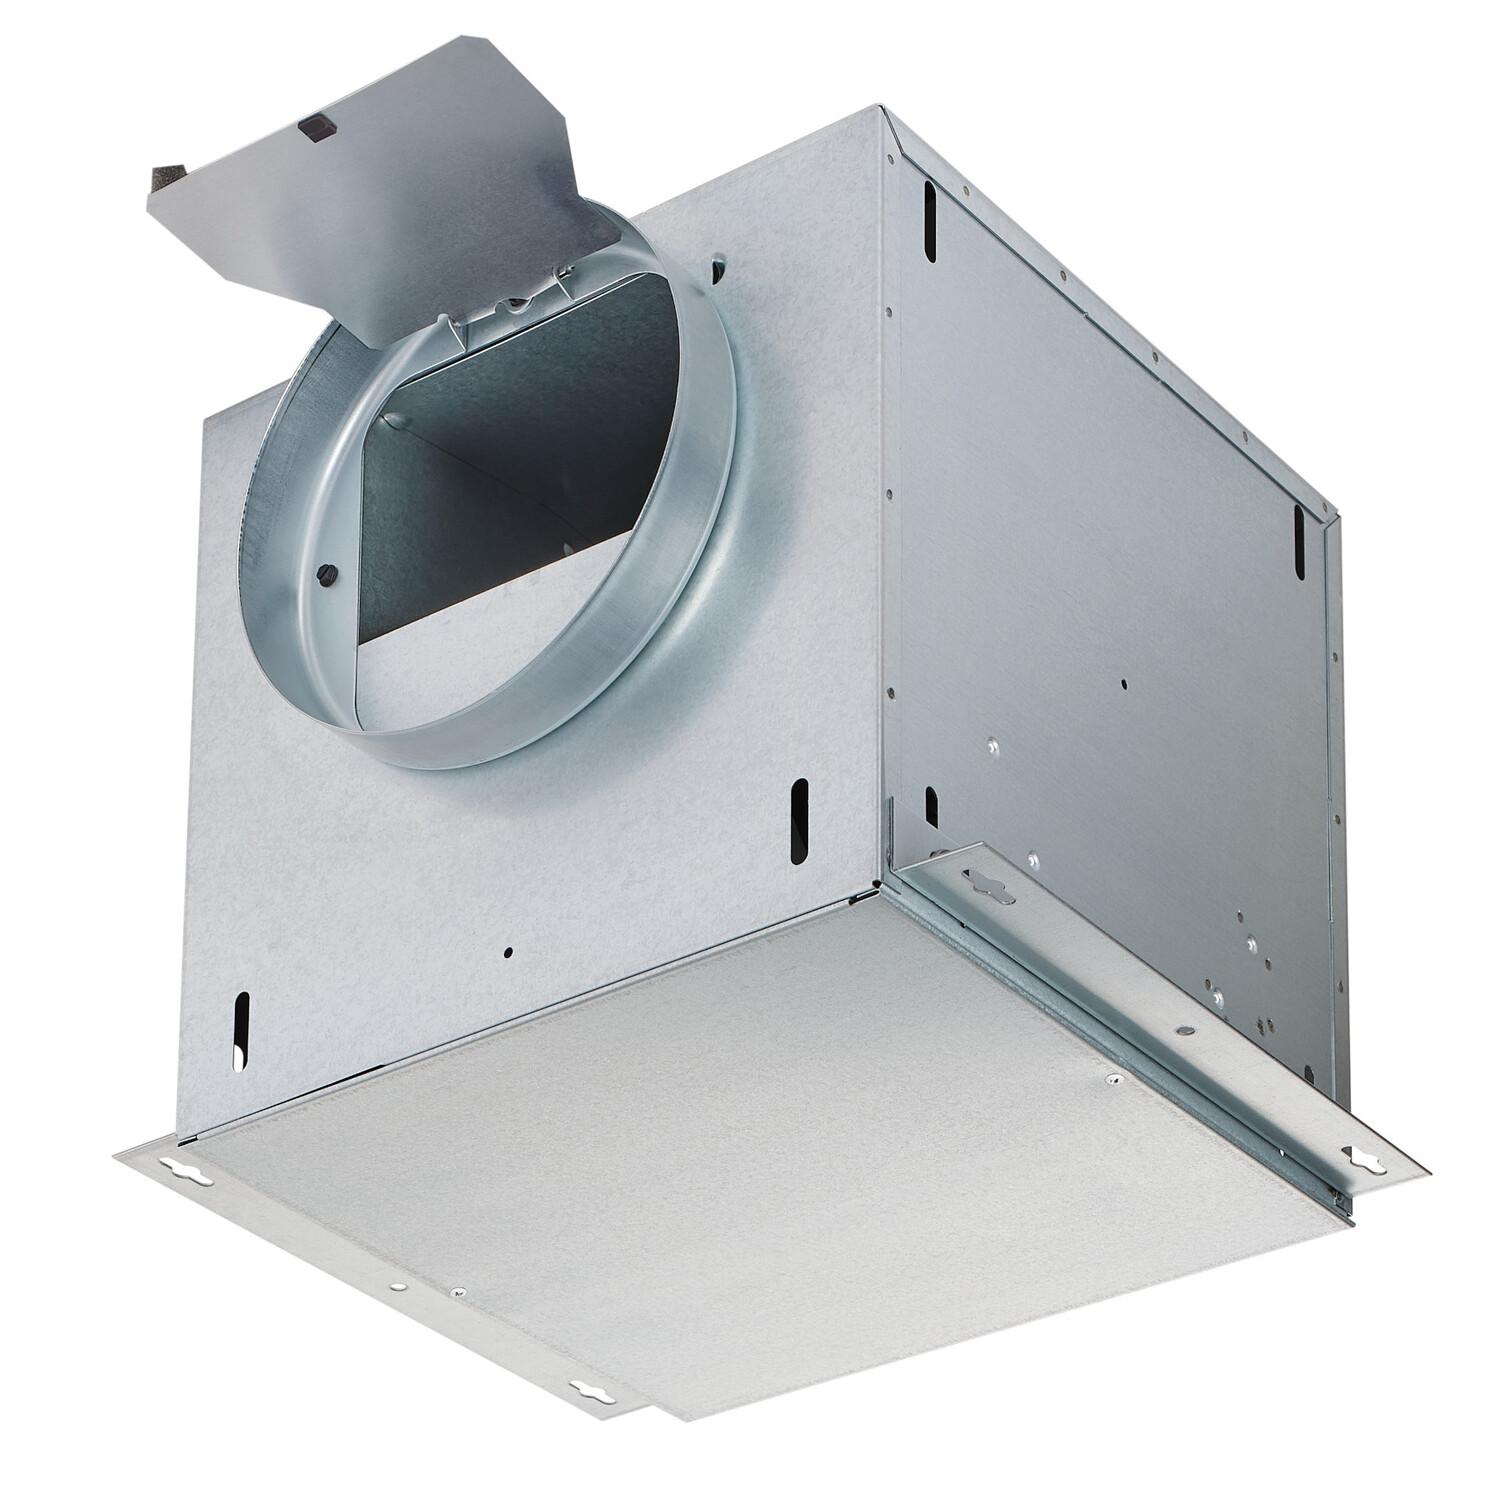 Broan High-Capacity, Light Commercial 270 CFM InLine Ventilation Fan, ENERGY STAR® certified